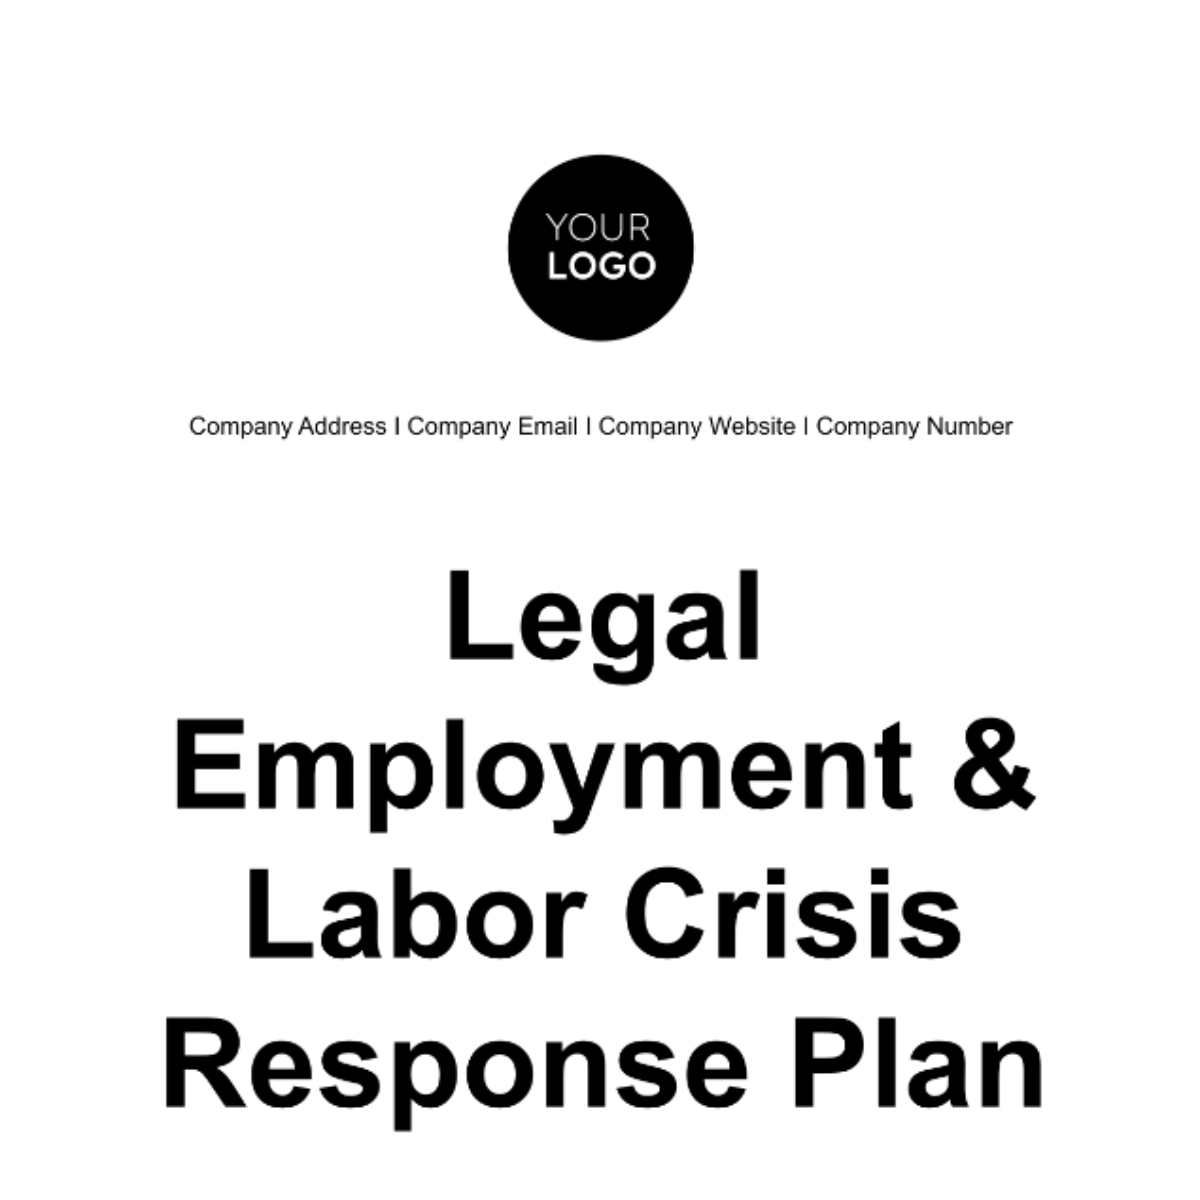 Free Legal Employment & Labor Crisis Response Plan Template